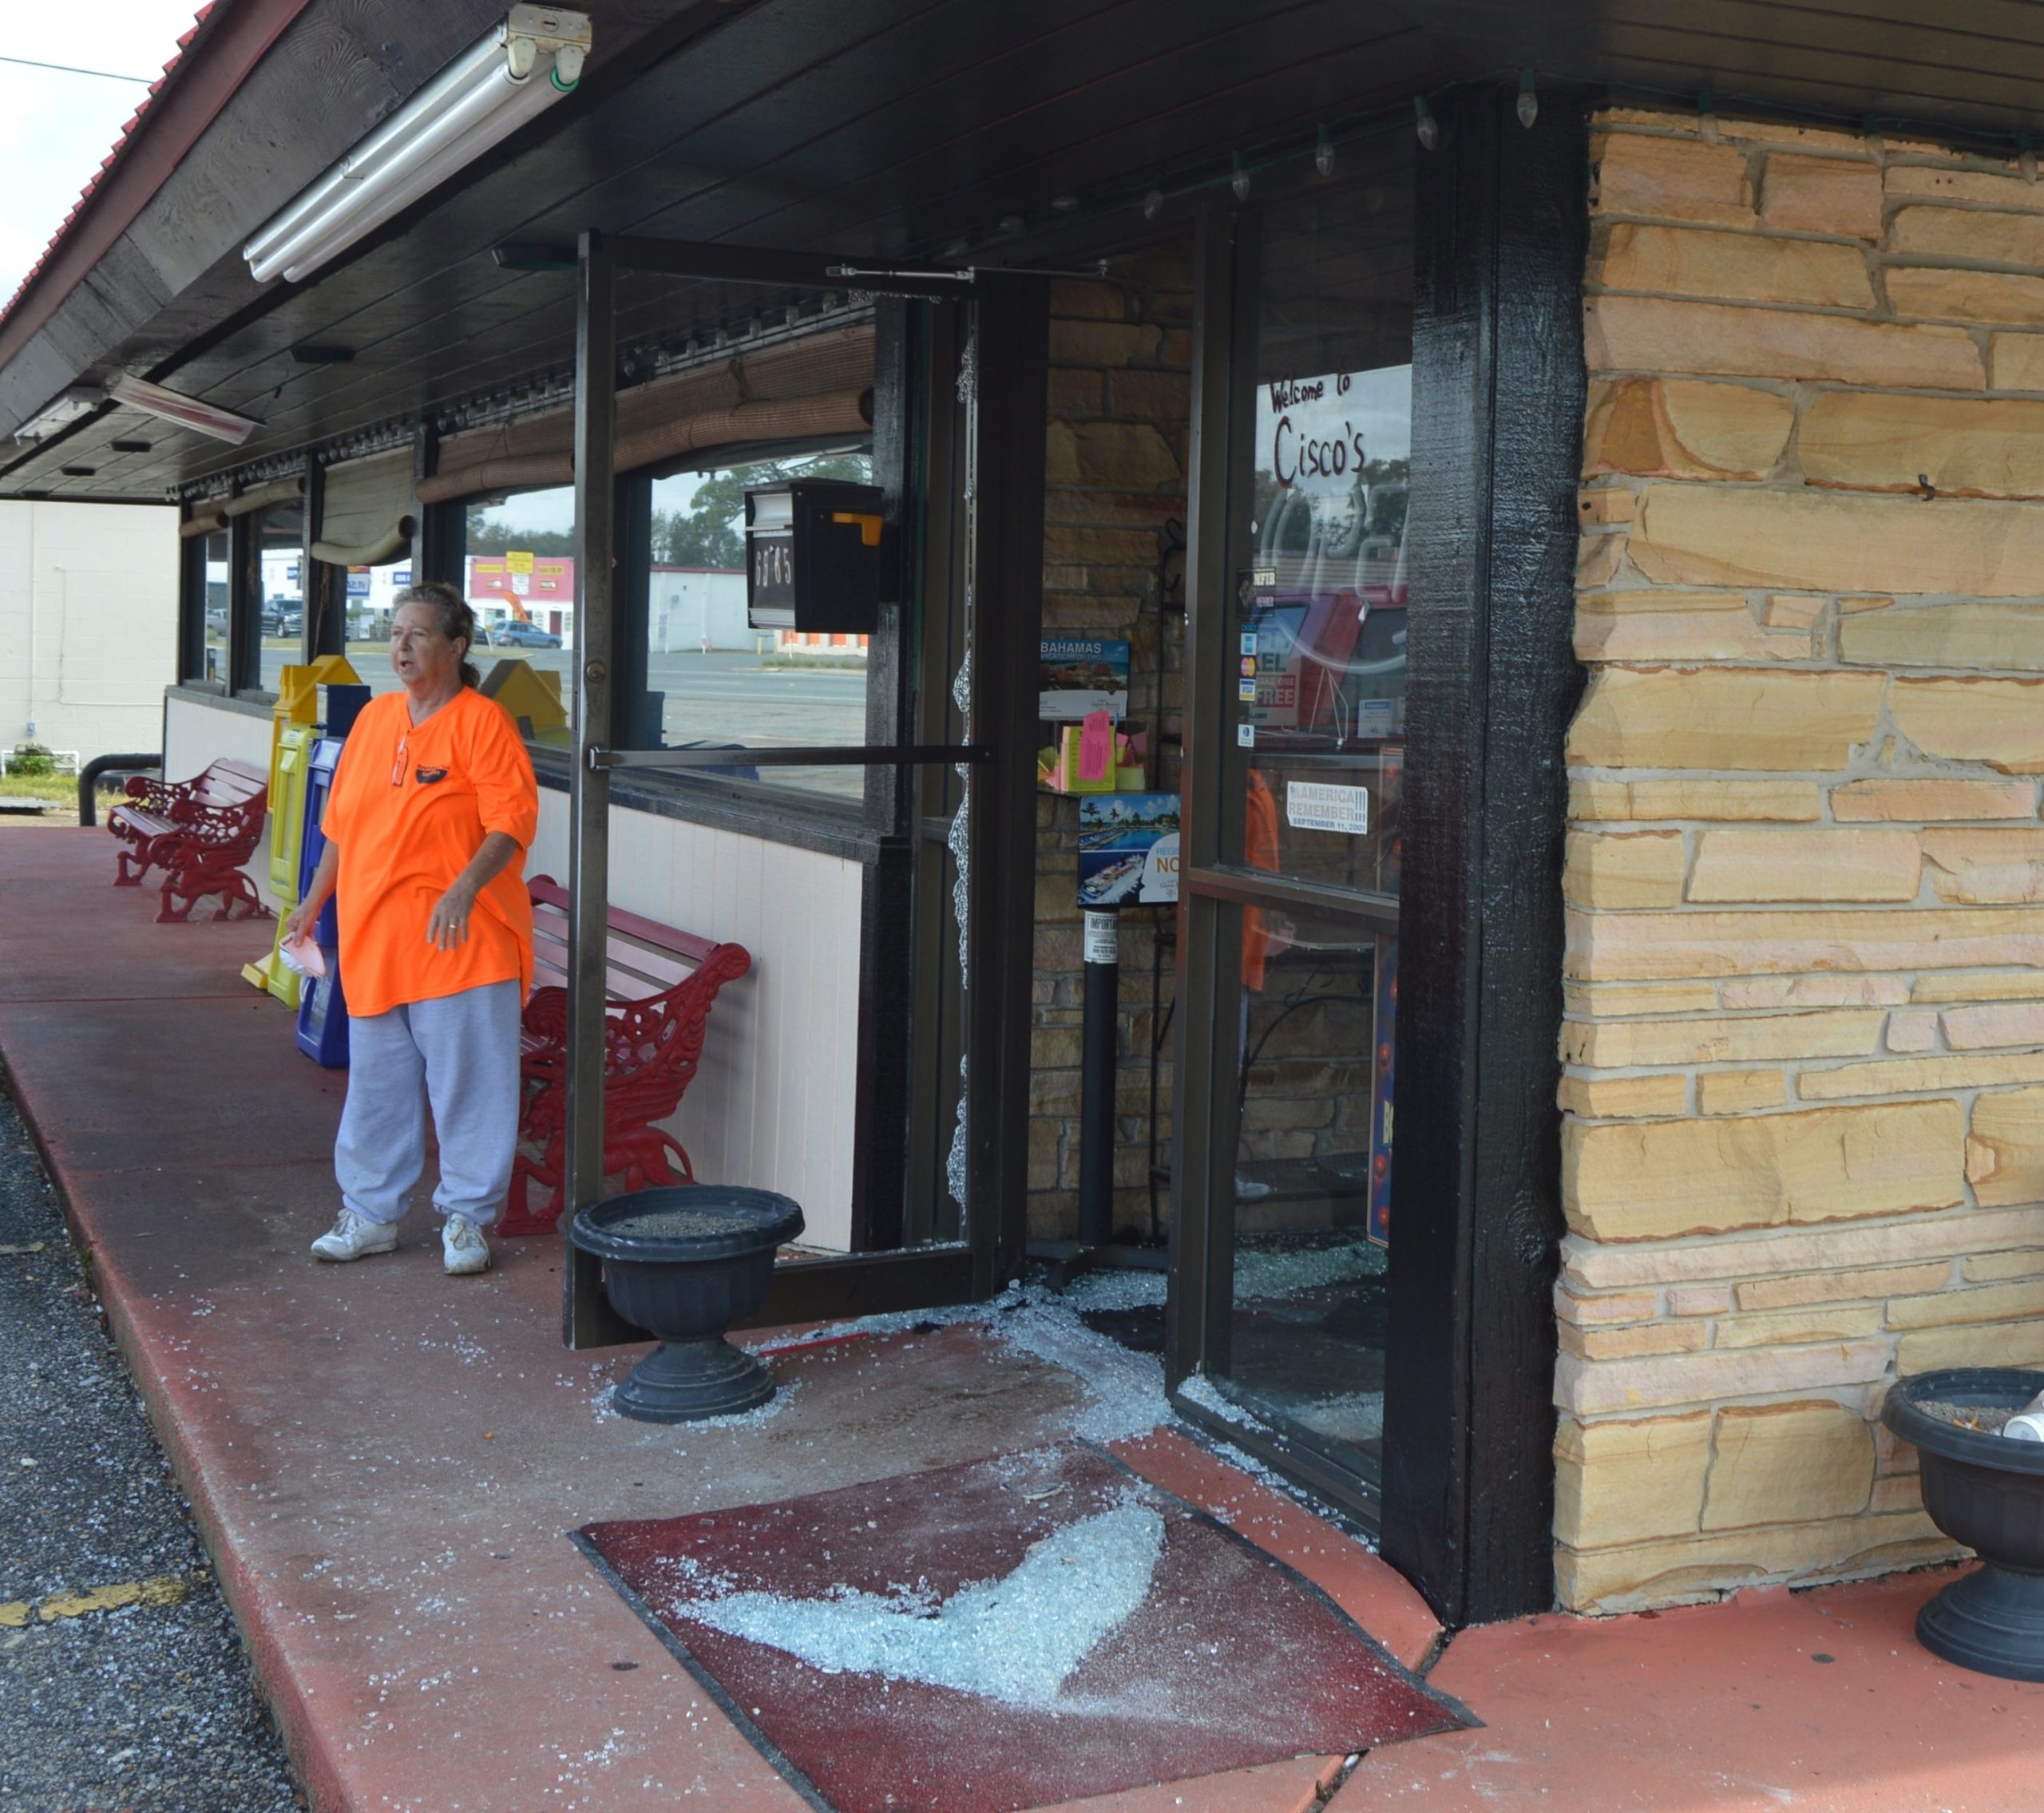 Cisco's Restaurant owner Betty Ingram stands outside the restaurant Tuesday morning following a devastating Monday night fire that occurred inside her business. (MATT BROWN | Press Gazette)